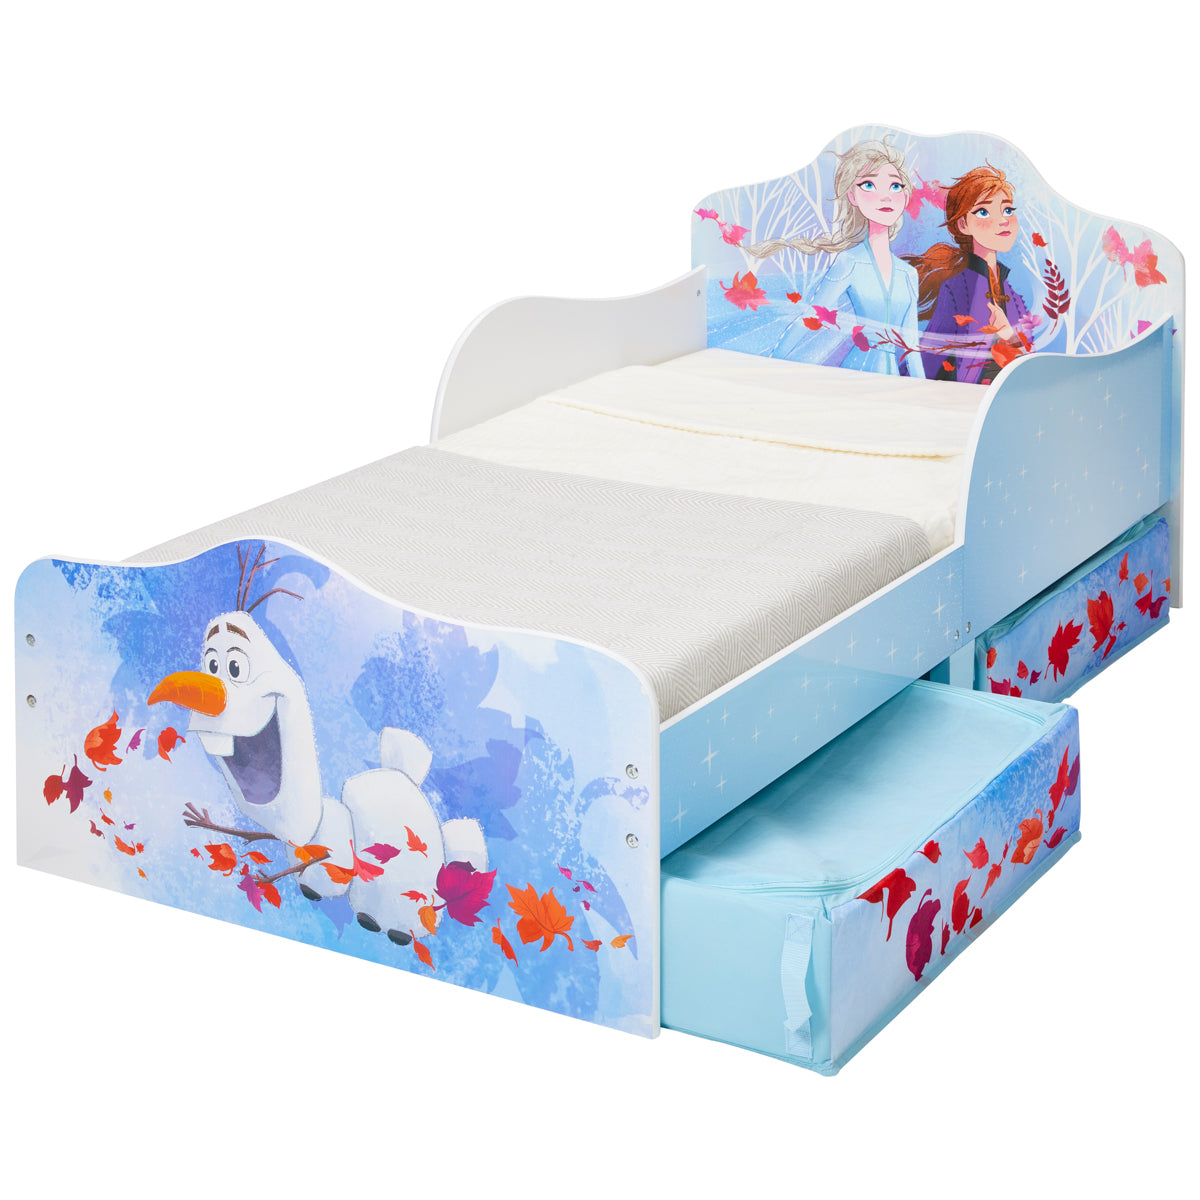 Plaats Overeenkomstig soep Frozen Kids Toddler Bed with Storage Drawers